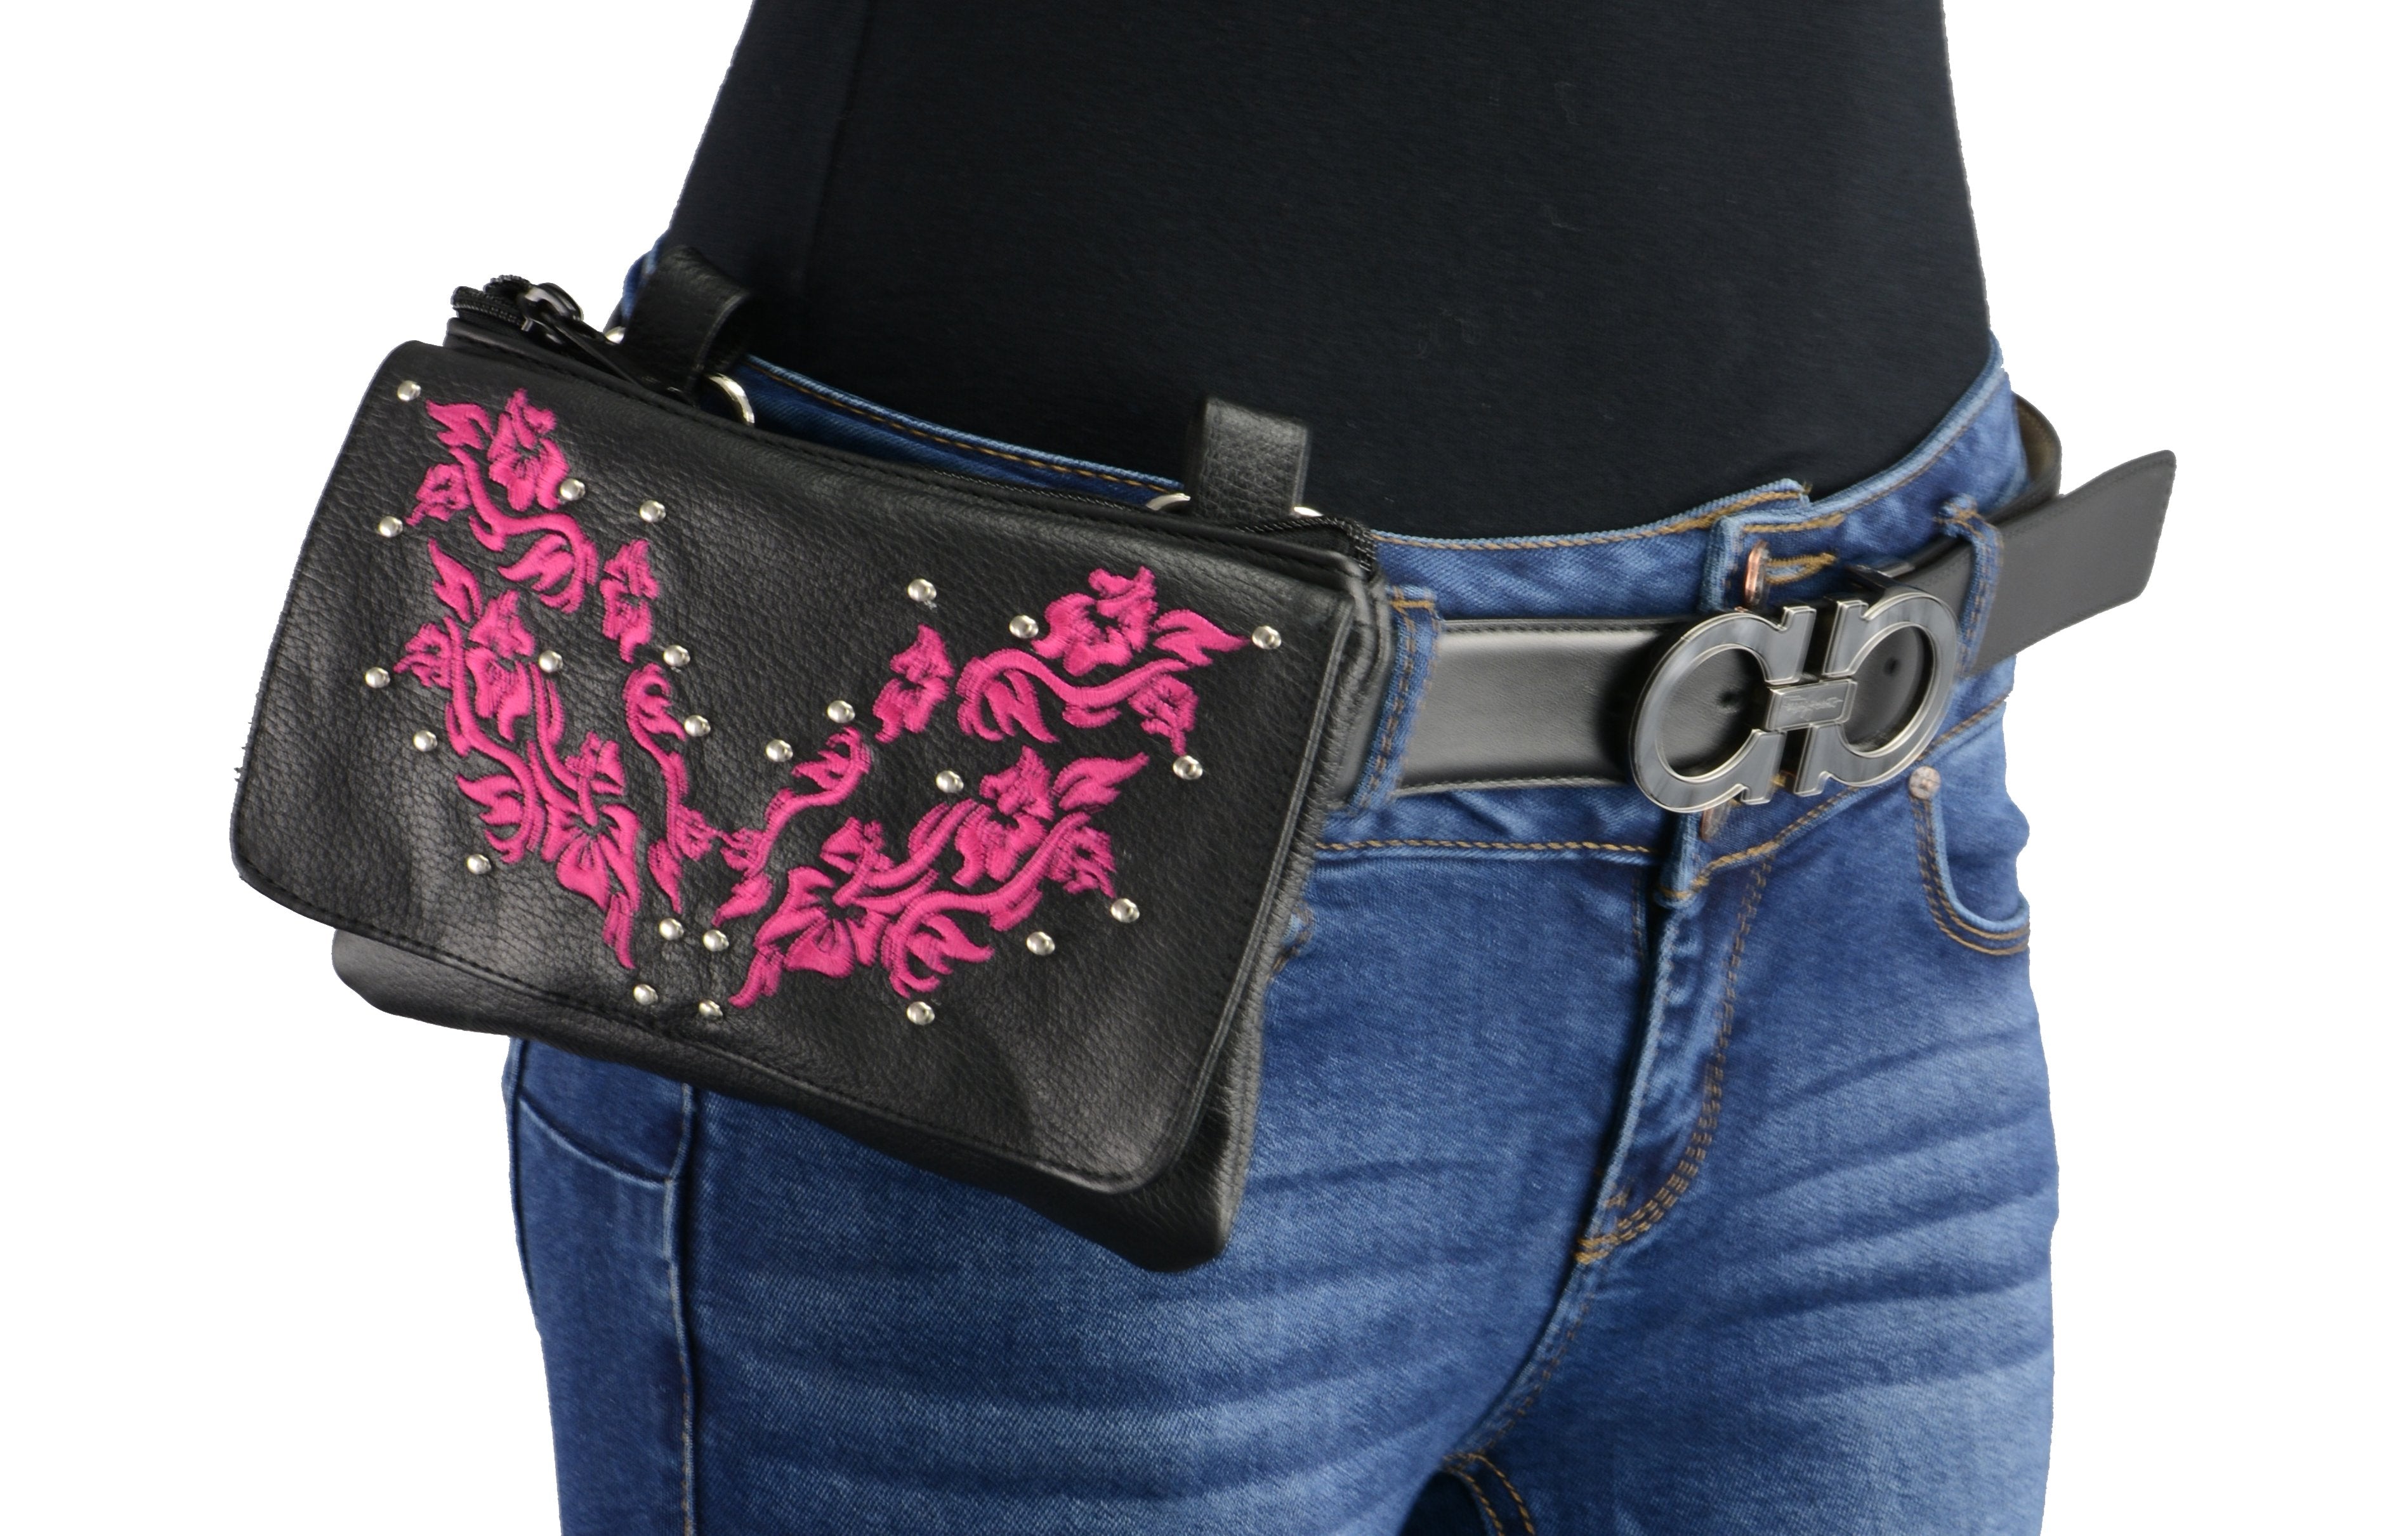 Milwaukee Leather MP8853 Women's 'Flower' Black and Pink Leather Multi Pocket Belt Bag